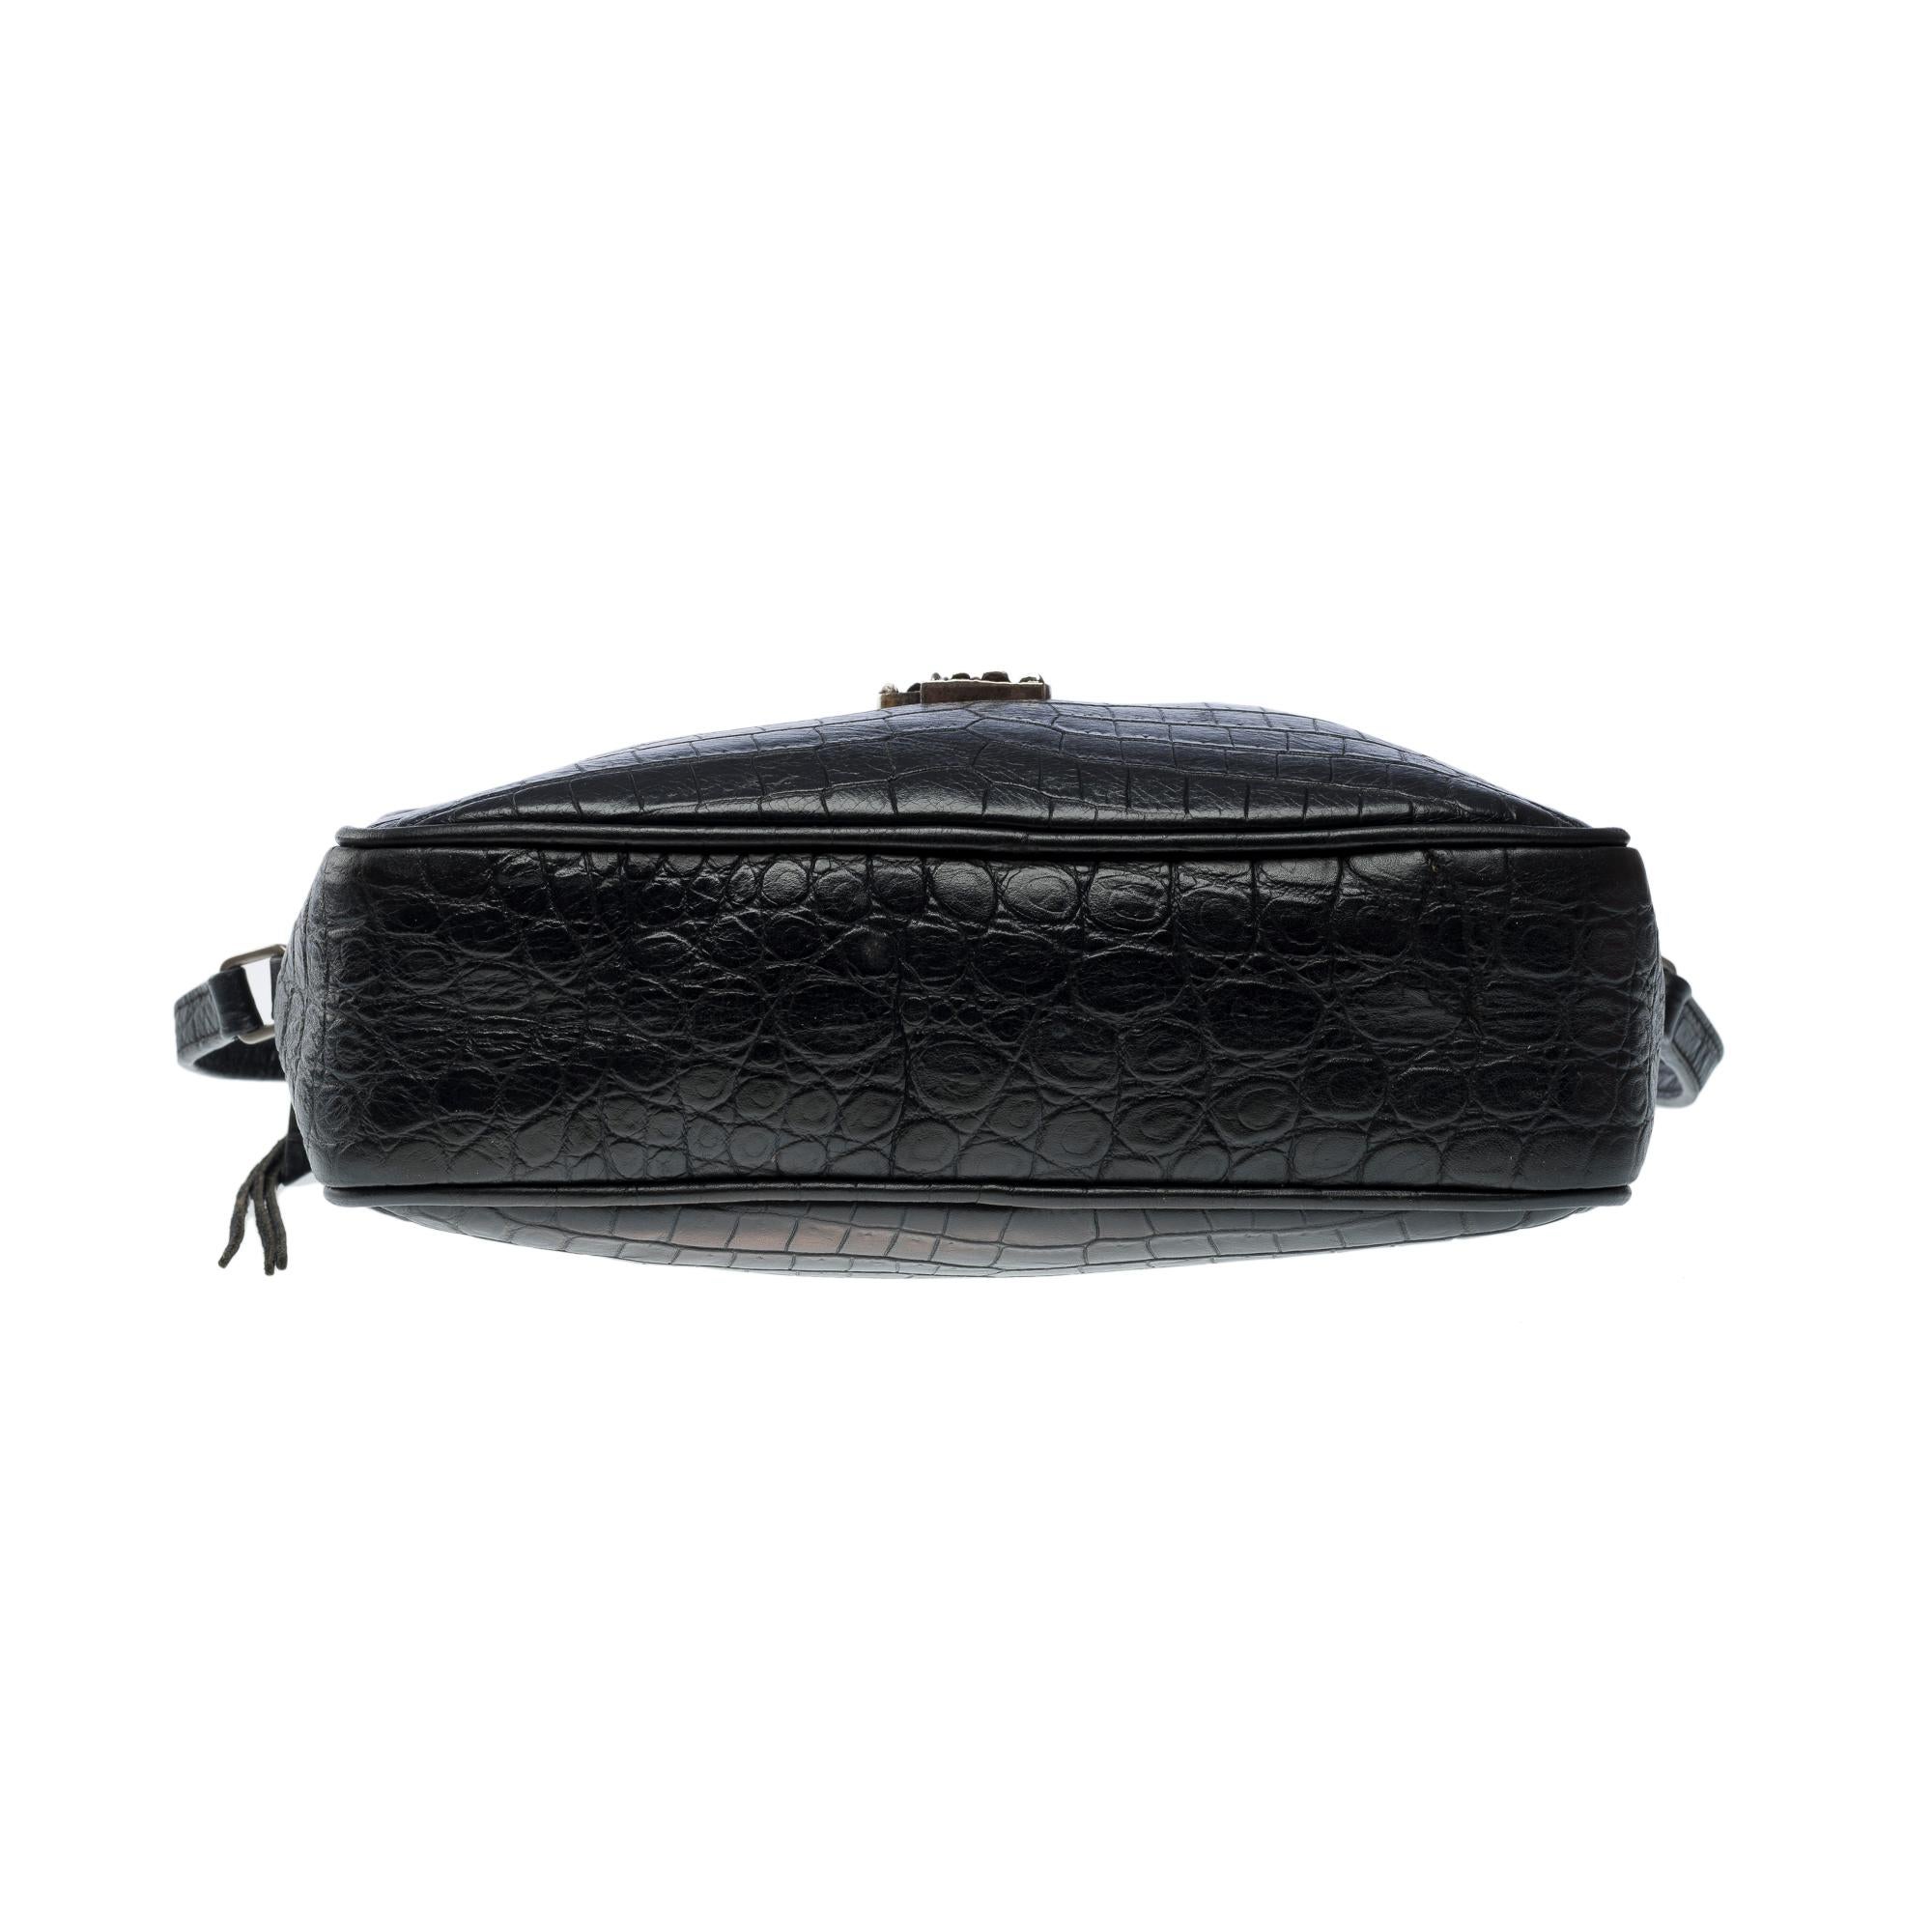 YSL Lou Camera shoulder bag in Black Crocodile style calf leather, SHW 6